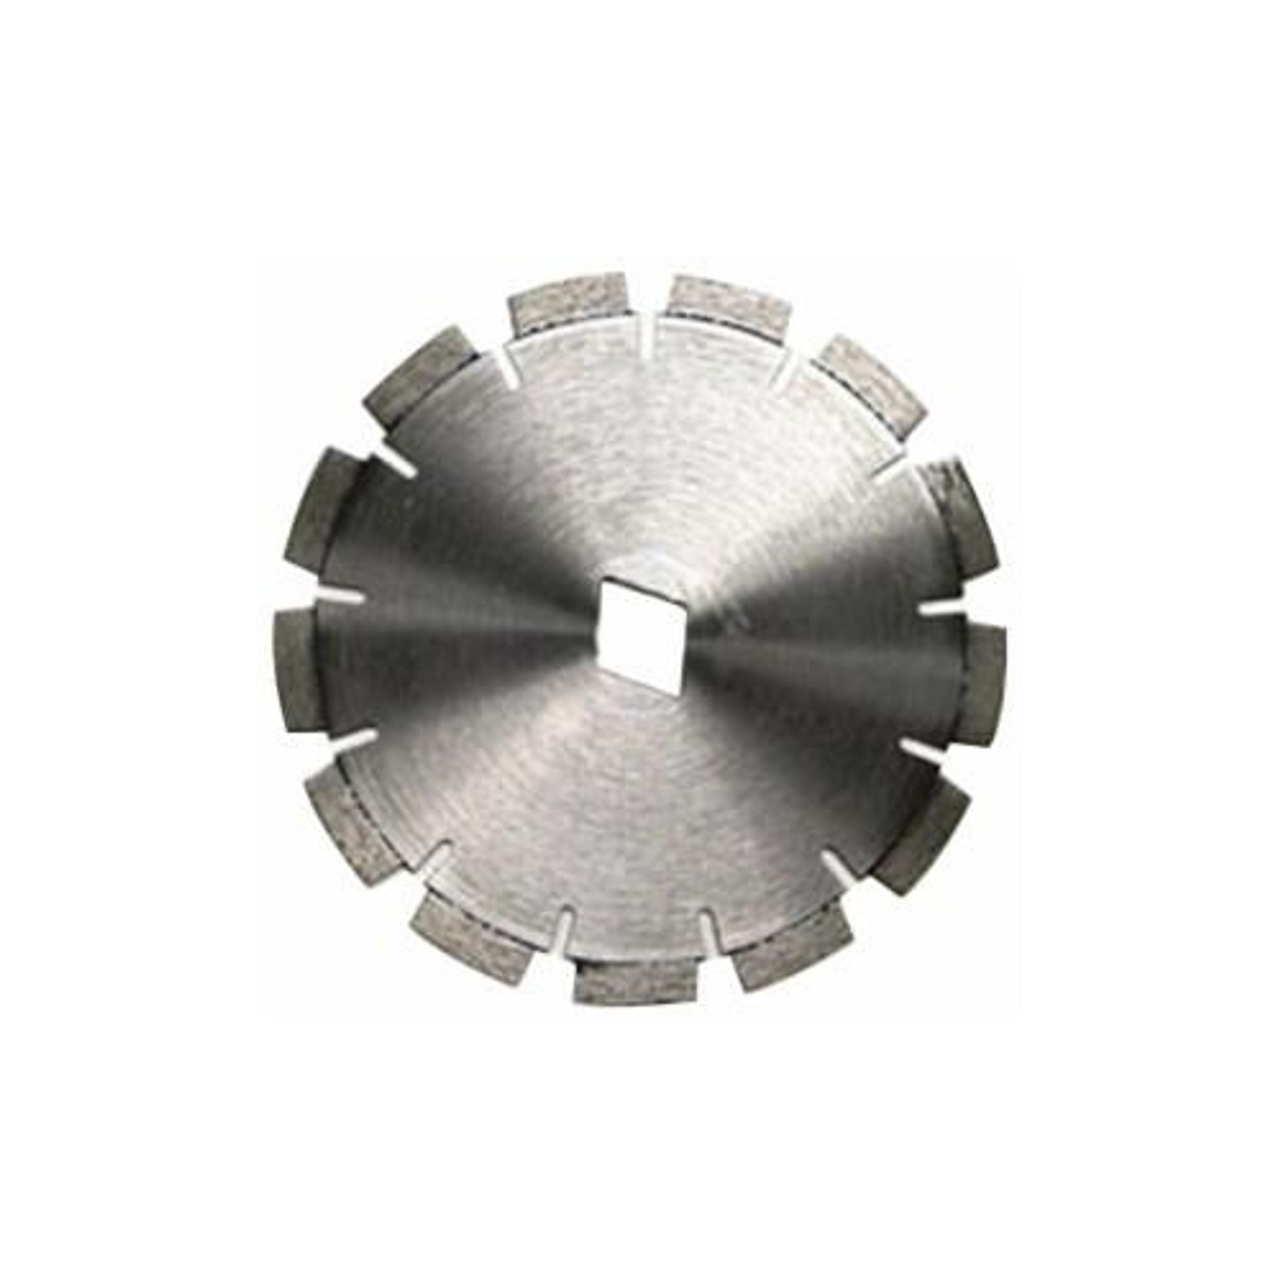 U.S. Saws DCN07090PU Segmented Dry Cut Blade, 7" x 0.090" x 7/8"